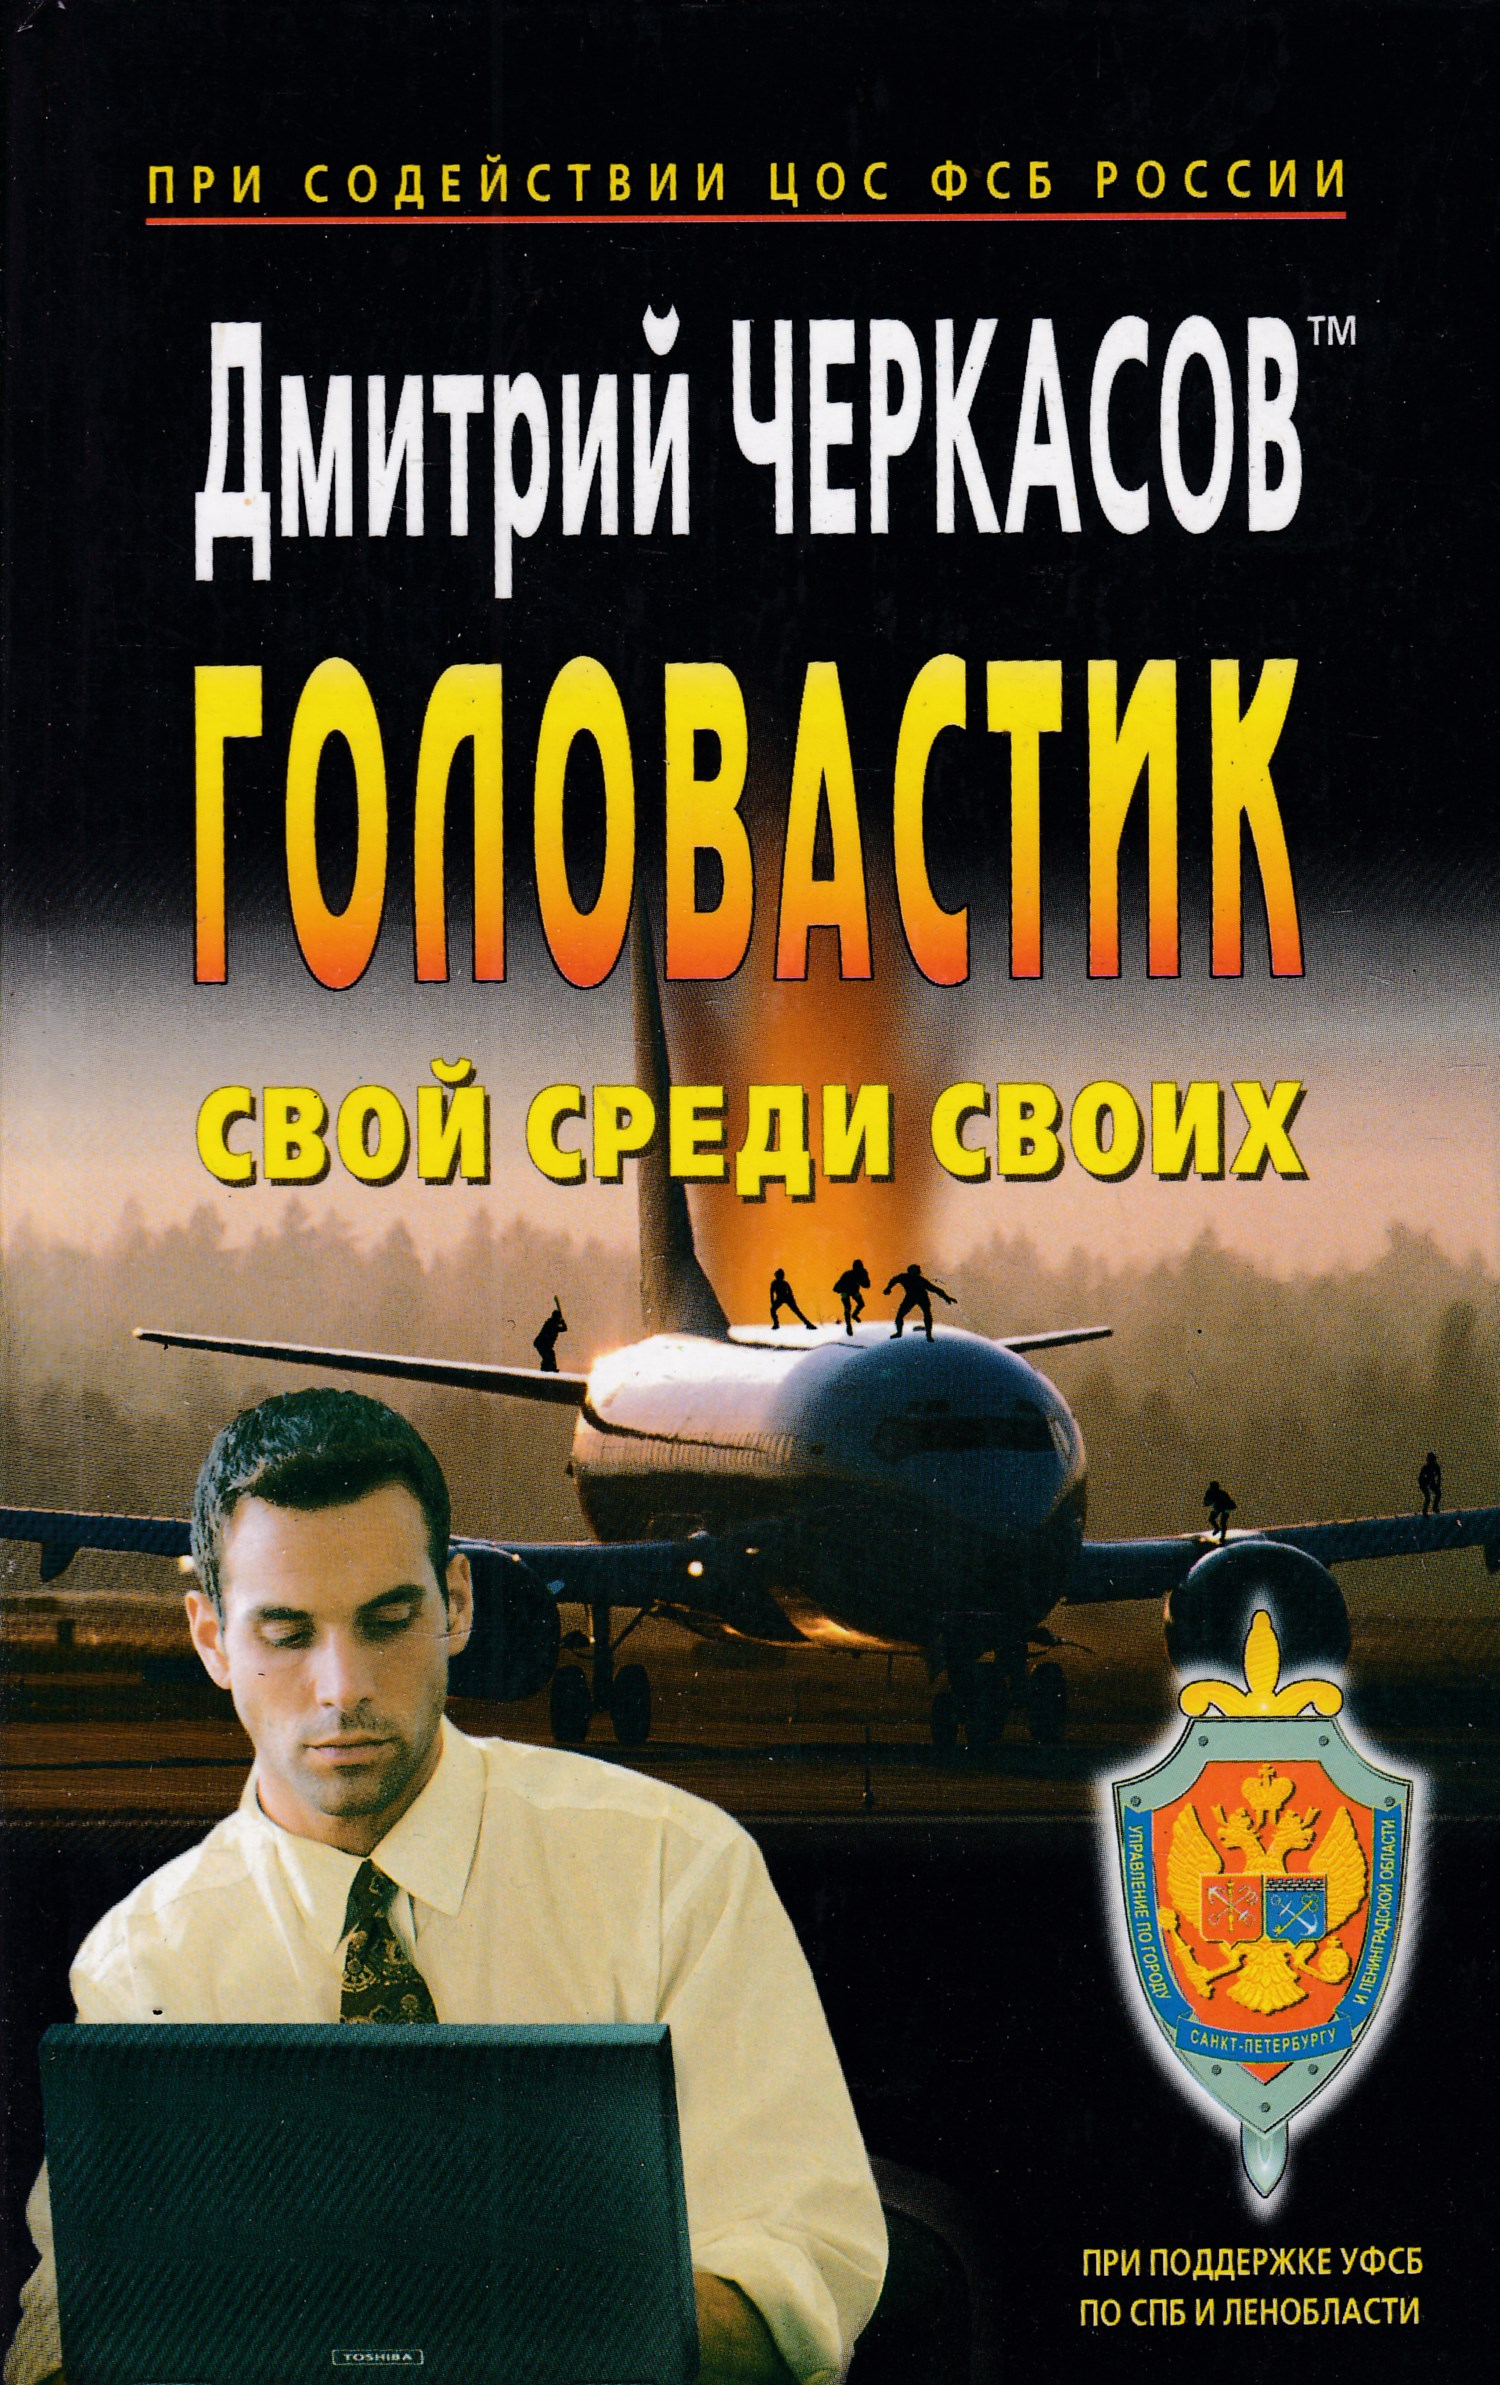 Книга дмитрия черкасова. Книга свой среди своих.